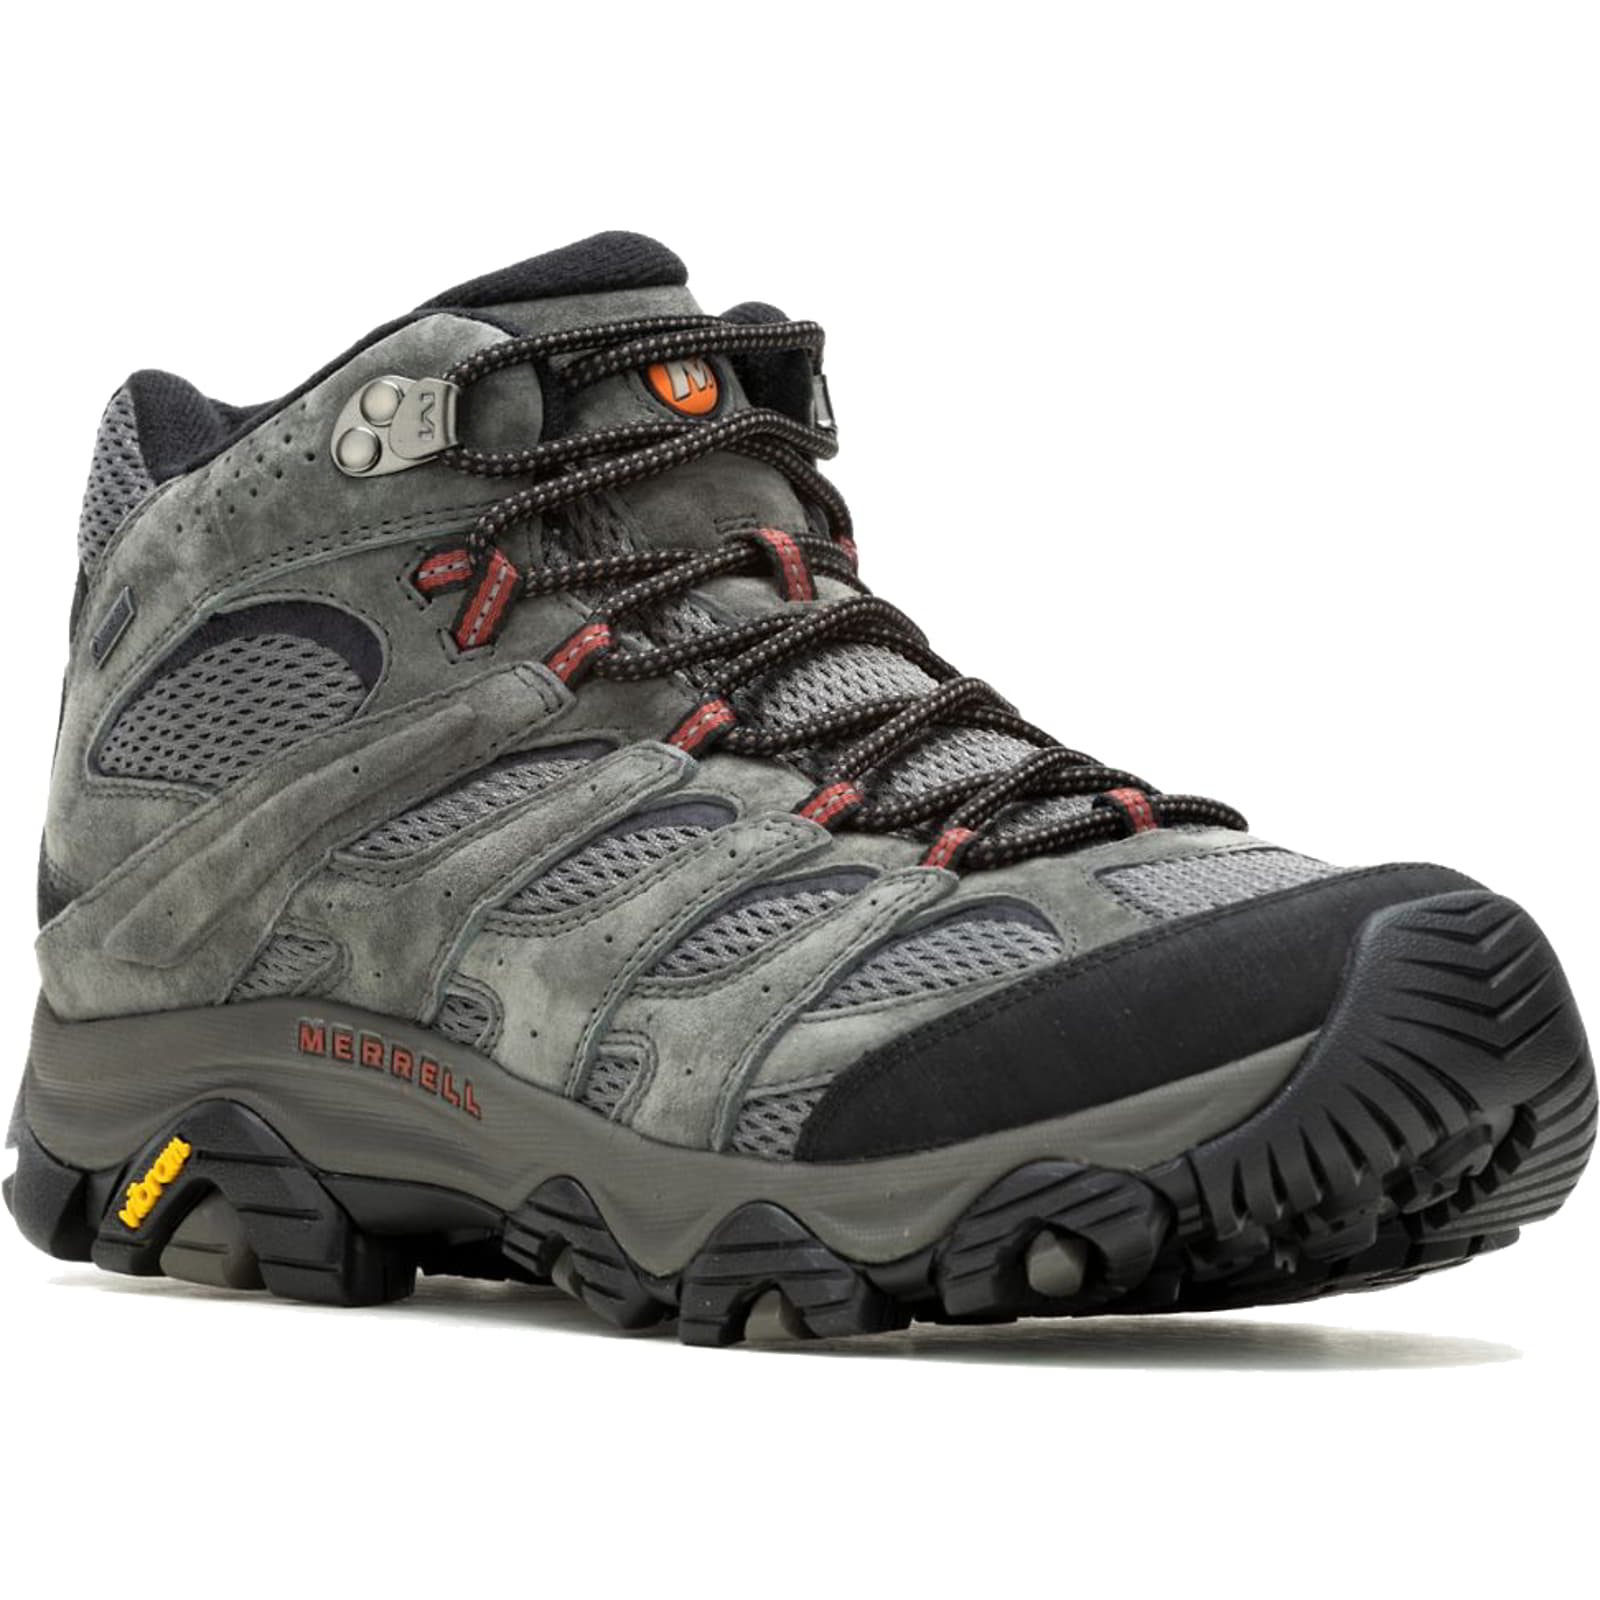 Merrell Men's Moab 3 Mid GTX Waterproof Walking Hiking Boots - UK 9.5